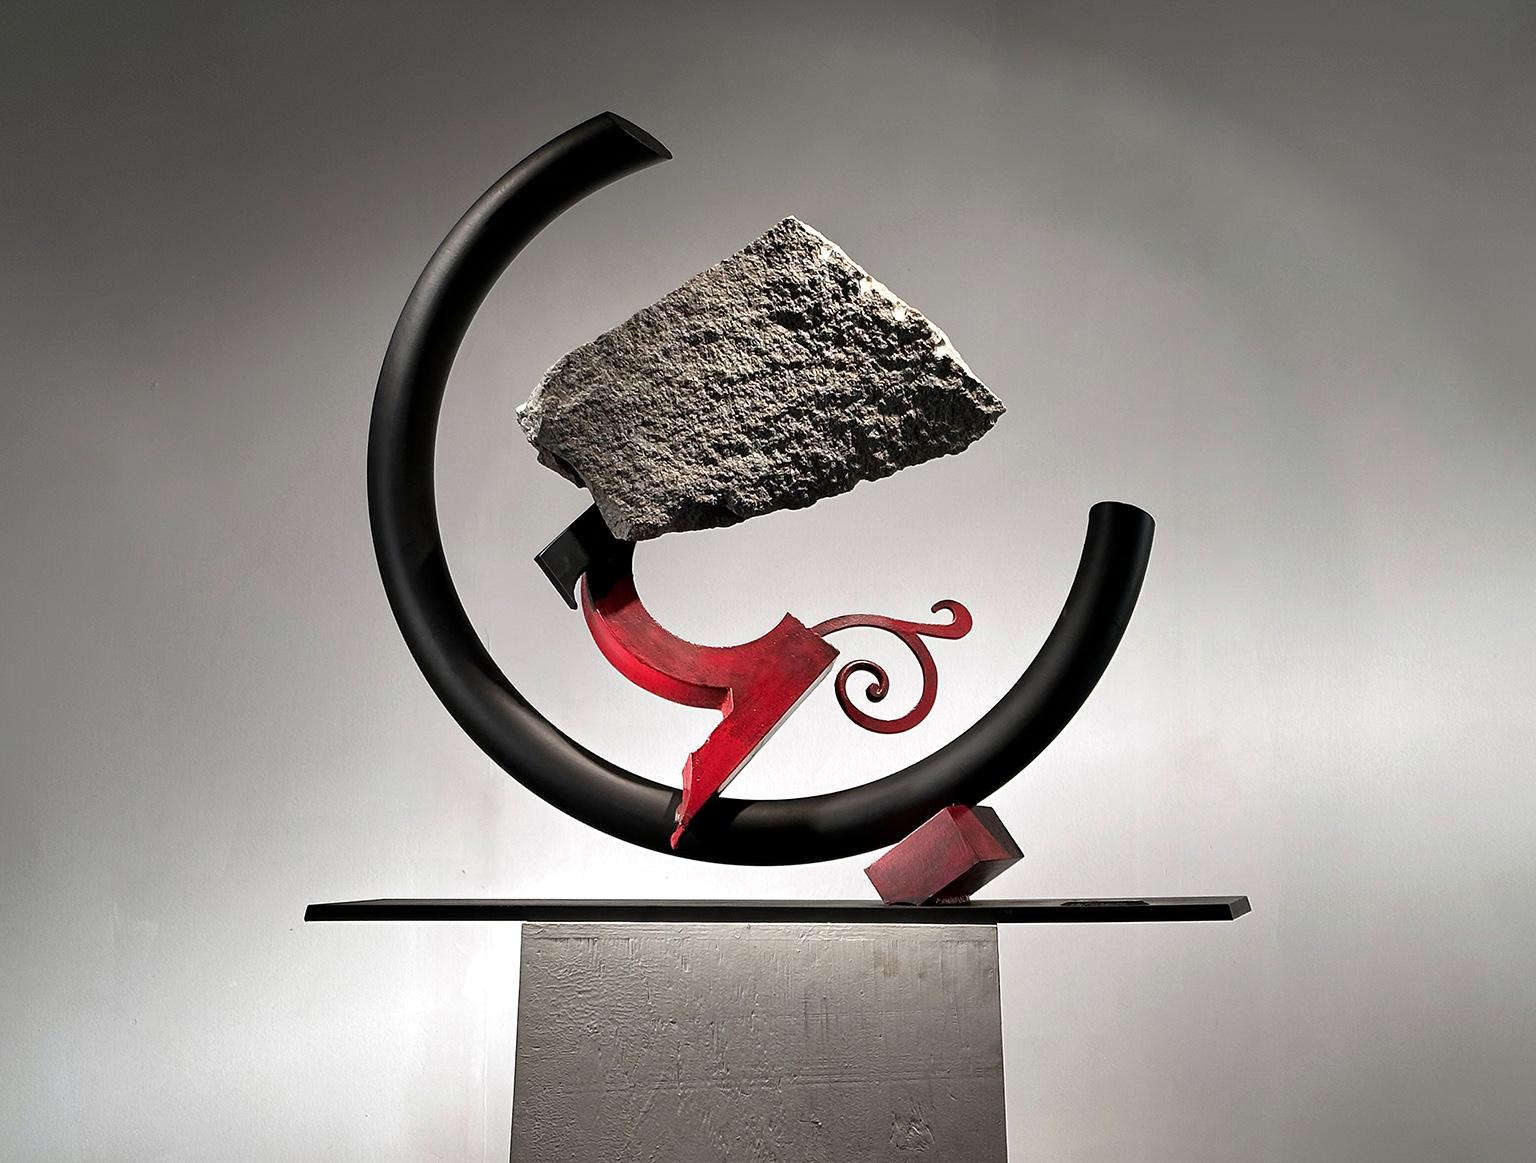 Abstract Sculpture John Van Alstine - « Sisyphean Circle ( tourbillon IV), sculpture industrielle abstraite en métal et pierre